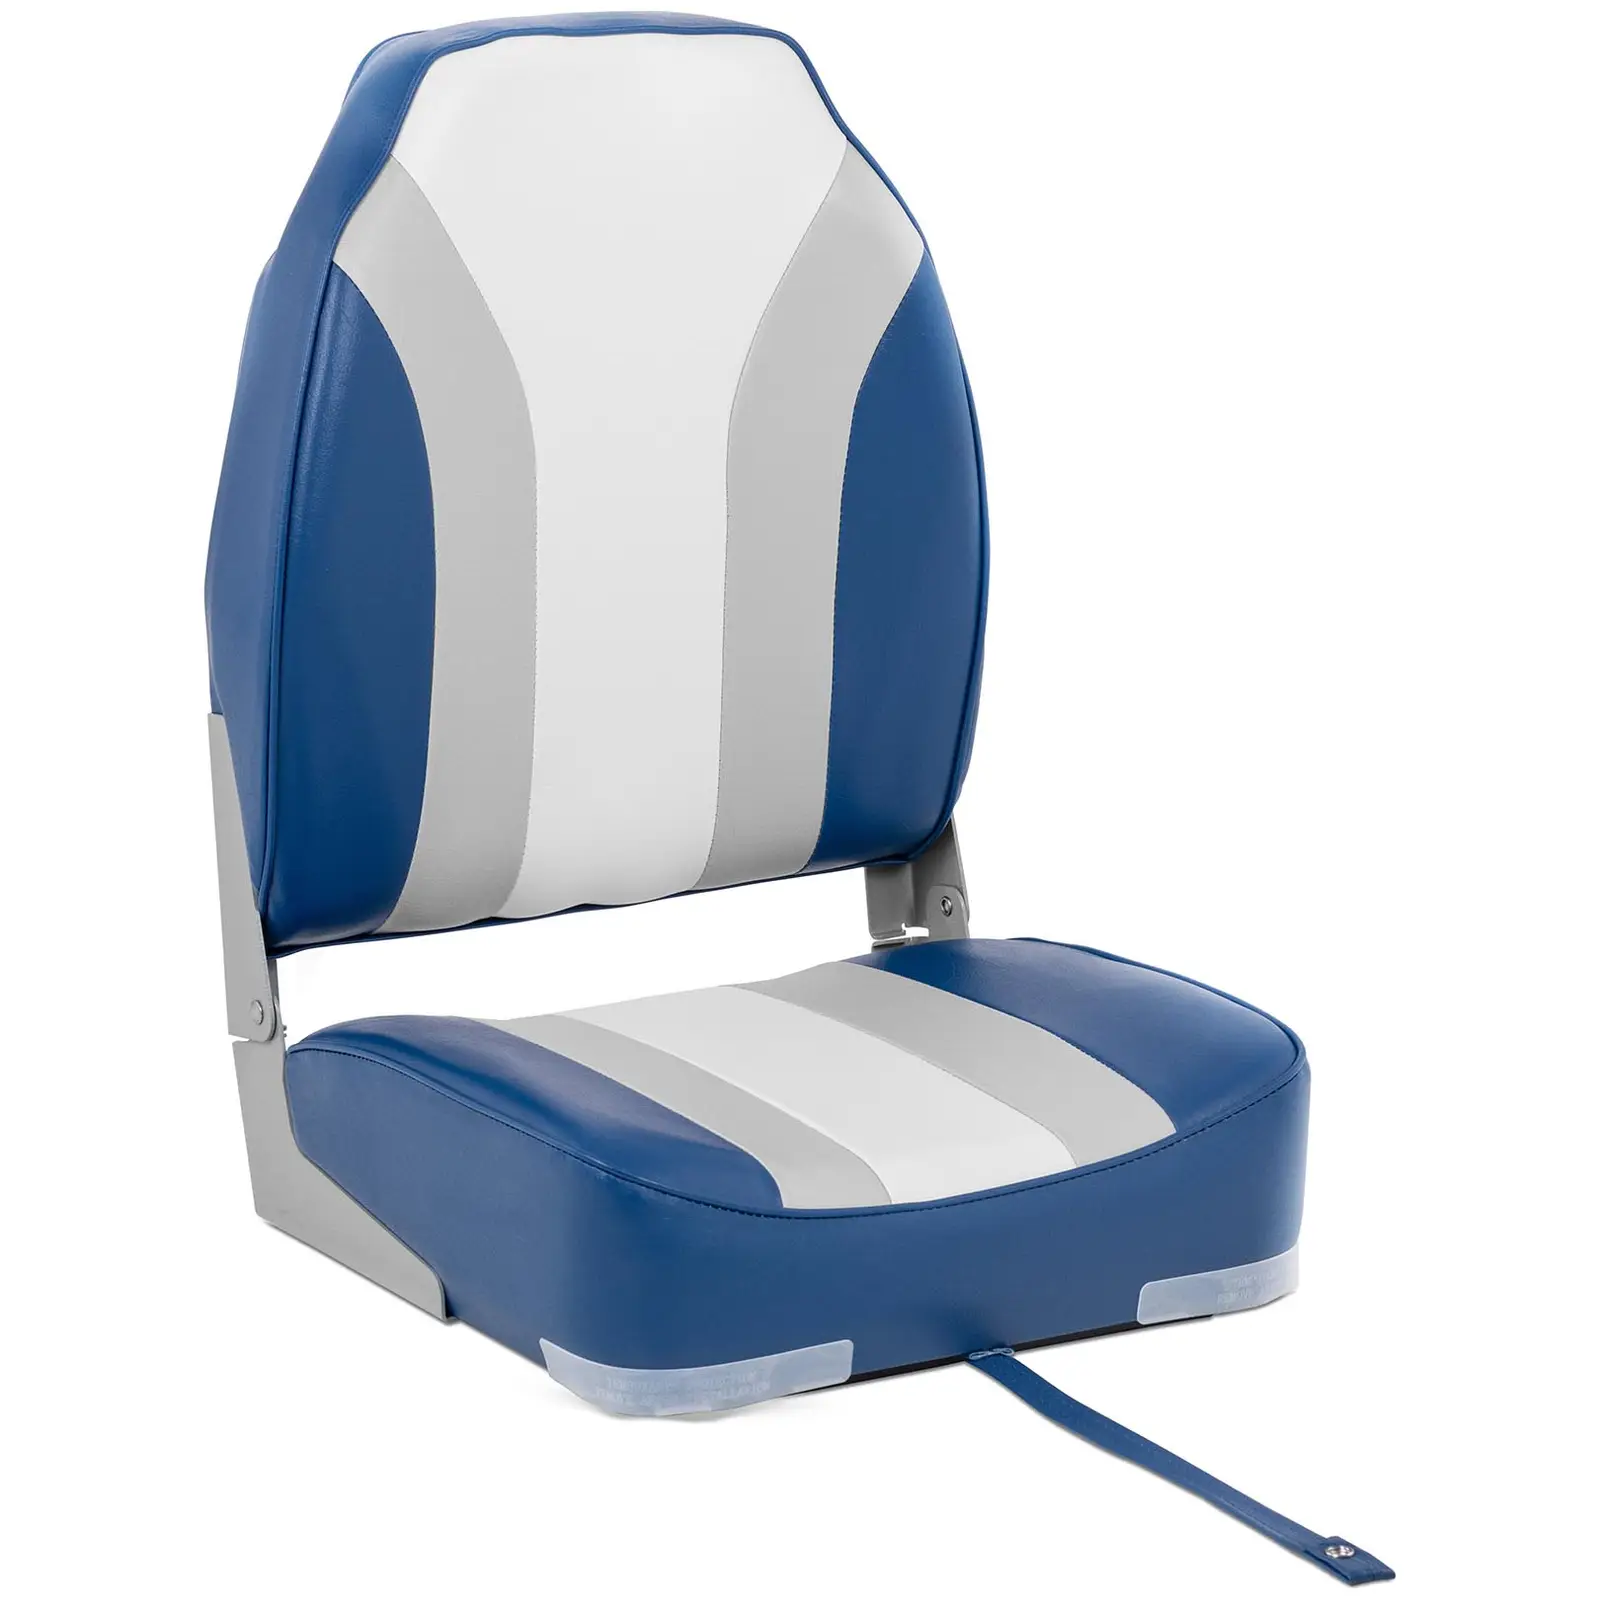 Valties sėdynė - 36x43x60 cm - Mėlyna, tamsiai pilka, balta